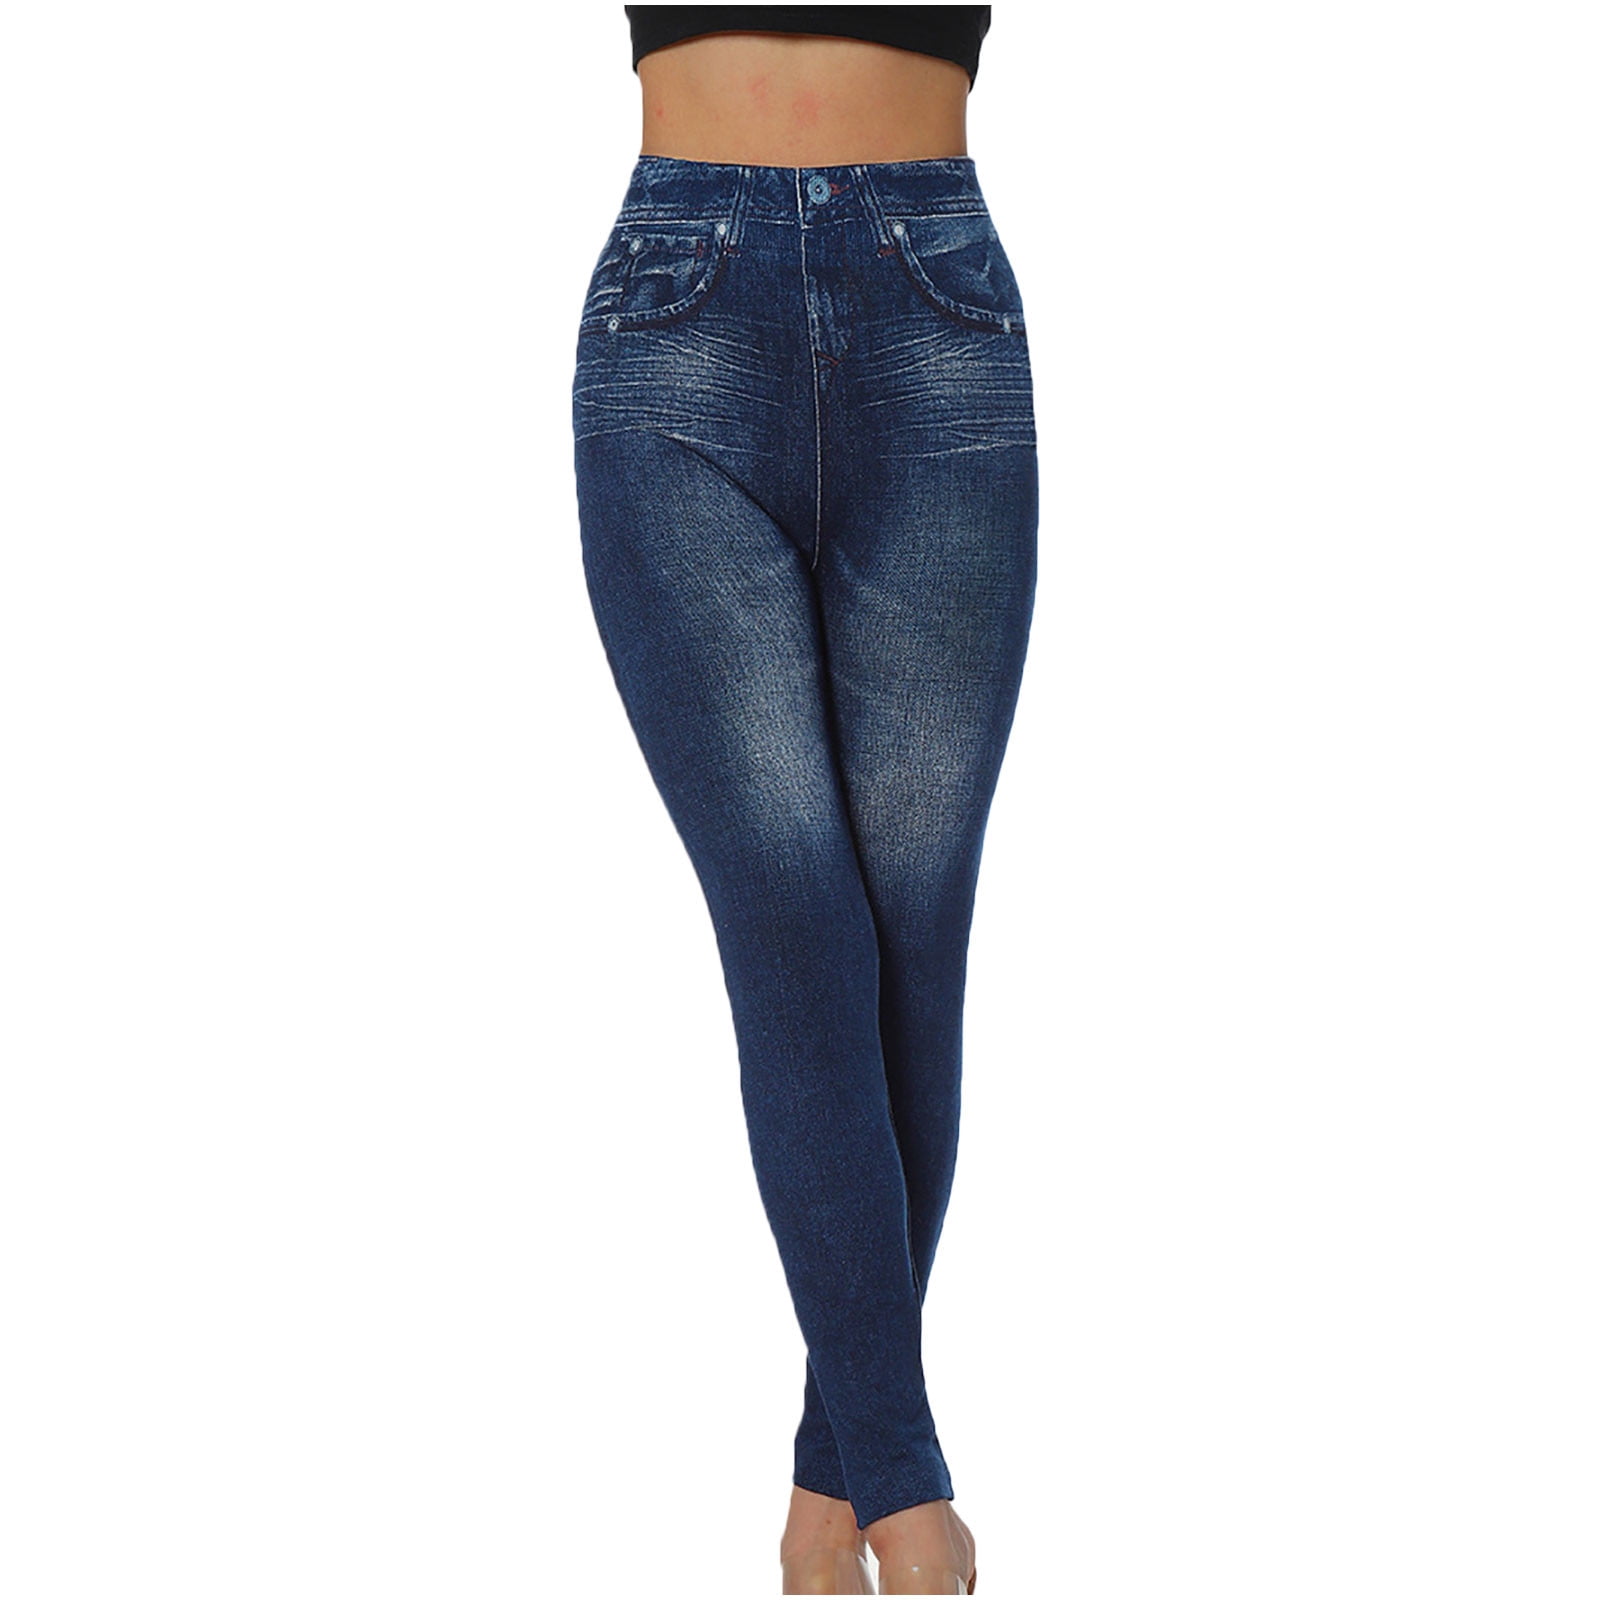 Dyegold Jean Leggings for Women Denim Print Fake Jeans Look Like Leggings  Sexy Stretchy High Waist Slim Skinny Jeggings Capri